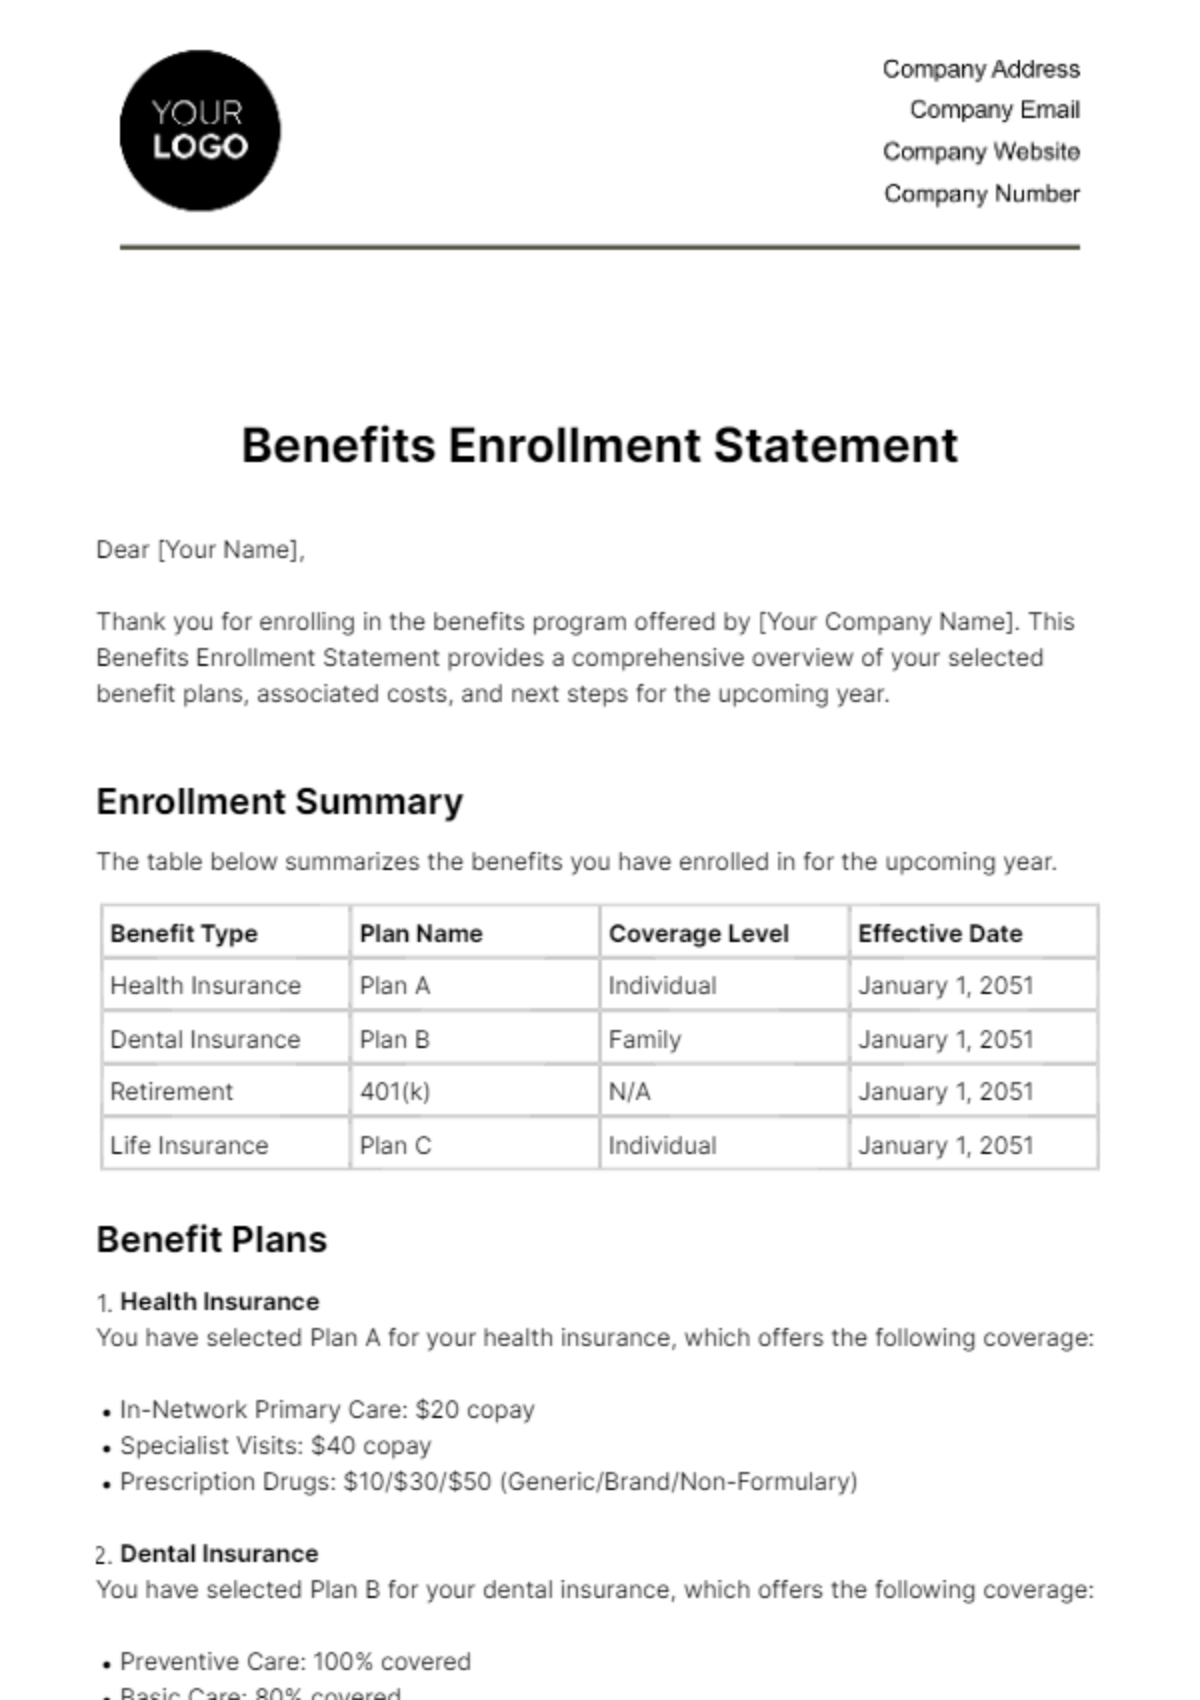 Benefits Enrollment Statement HR Template